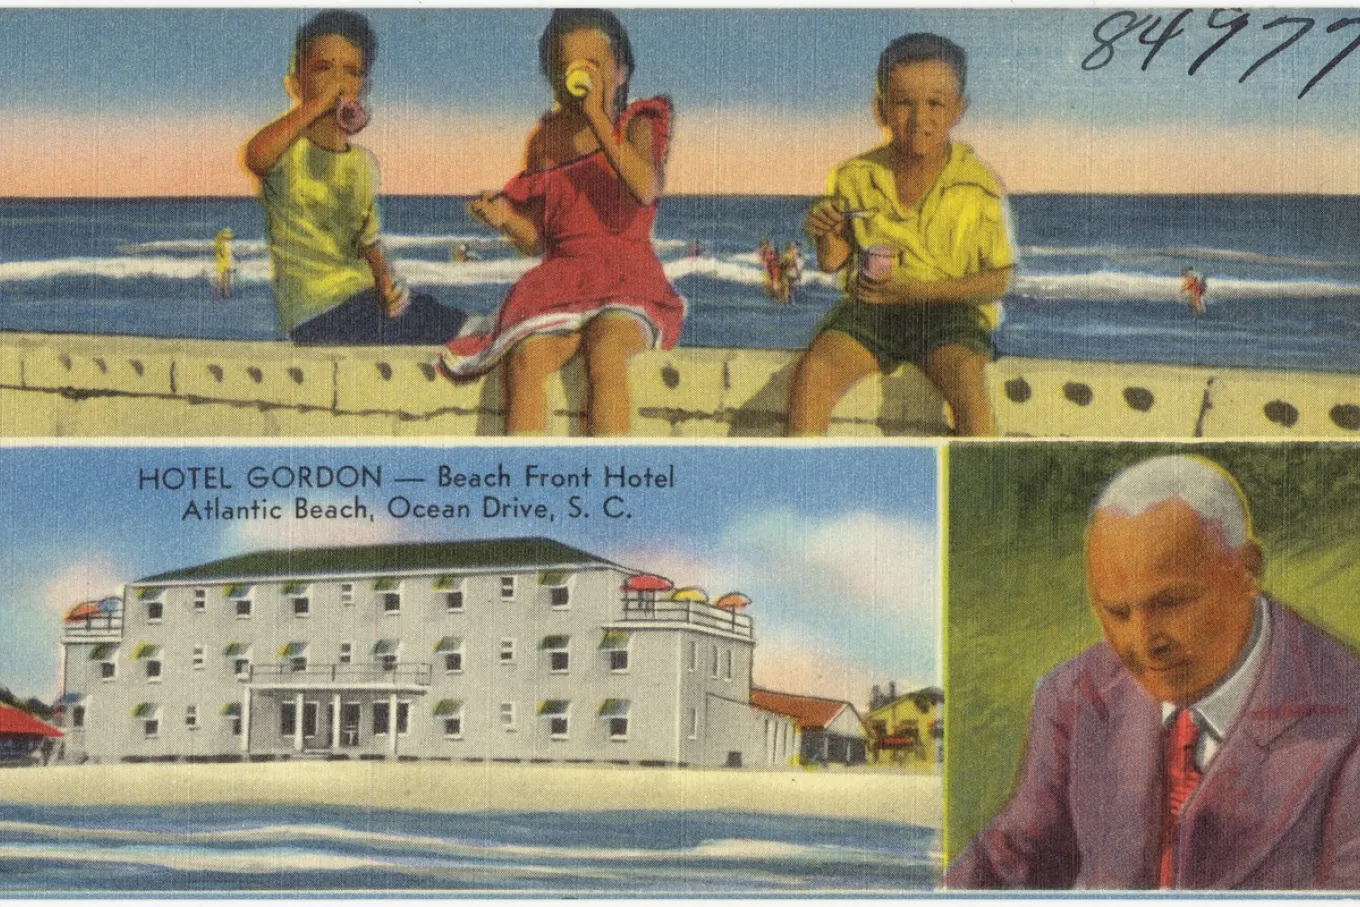 Hotel Gordon Beach front hotel, Atlantic Beach postcard